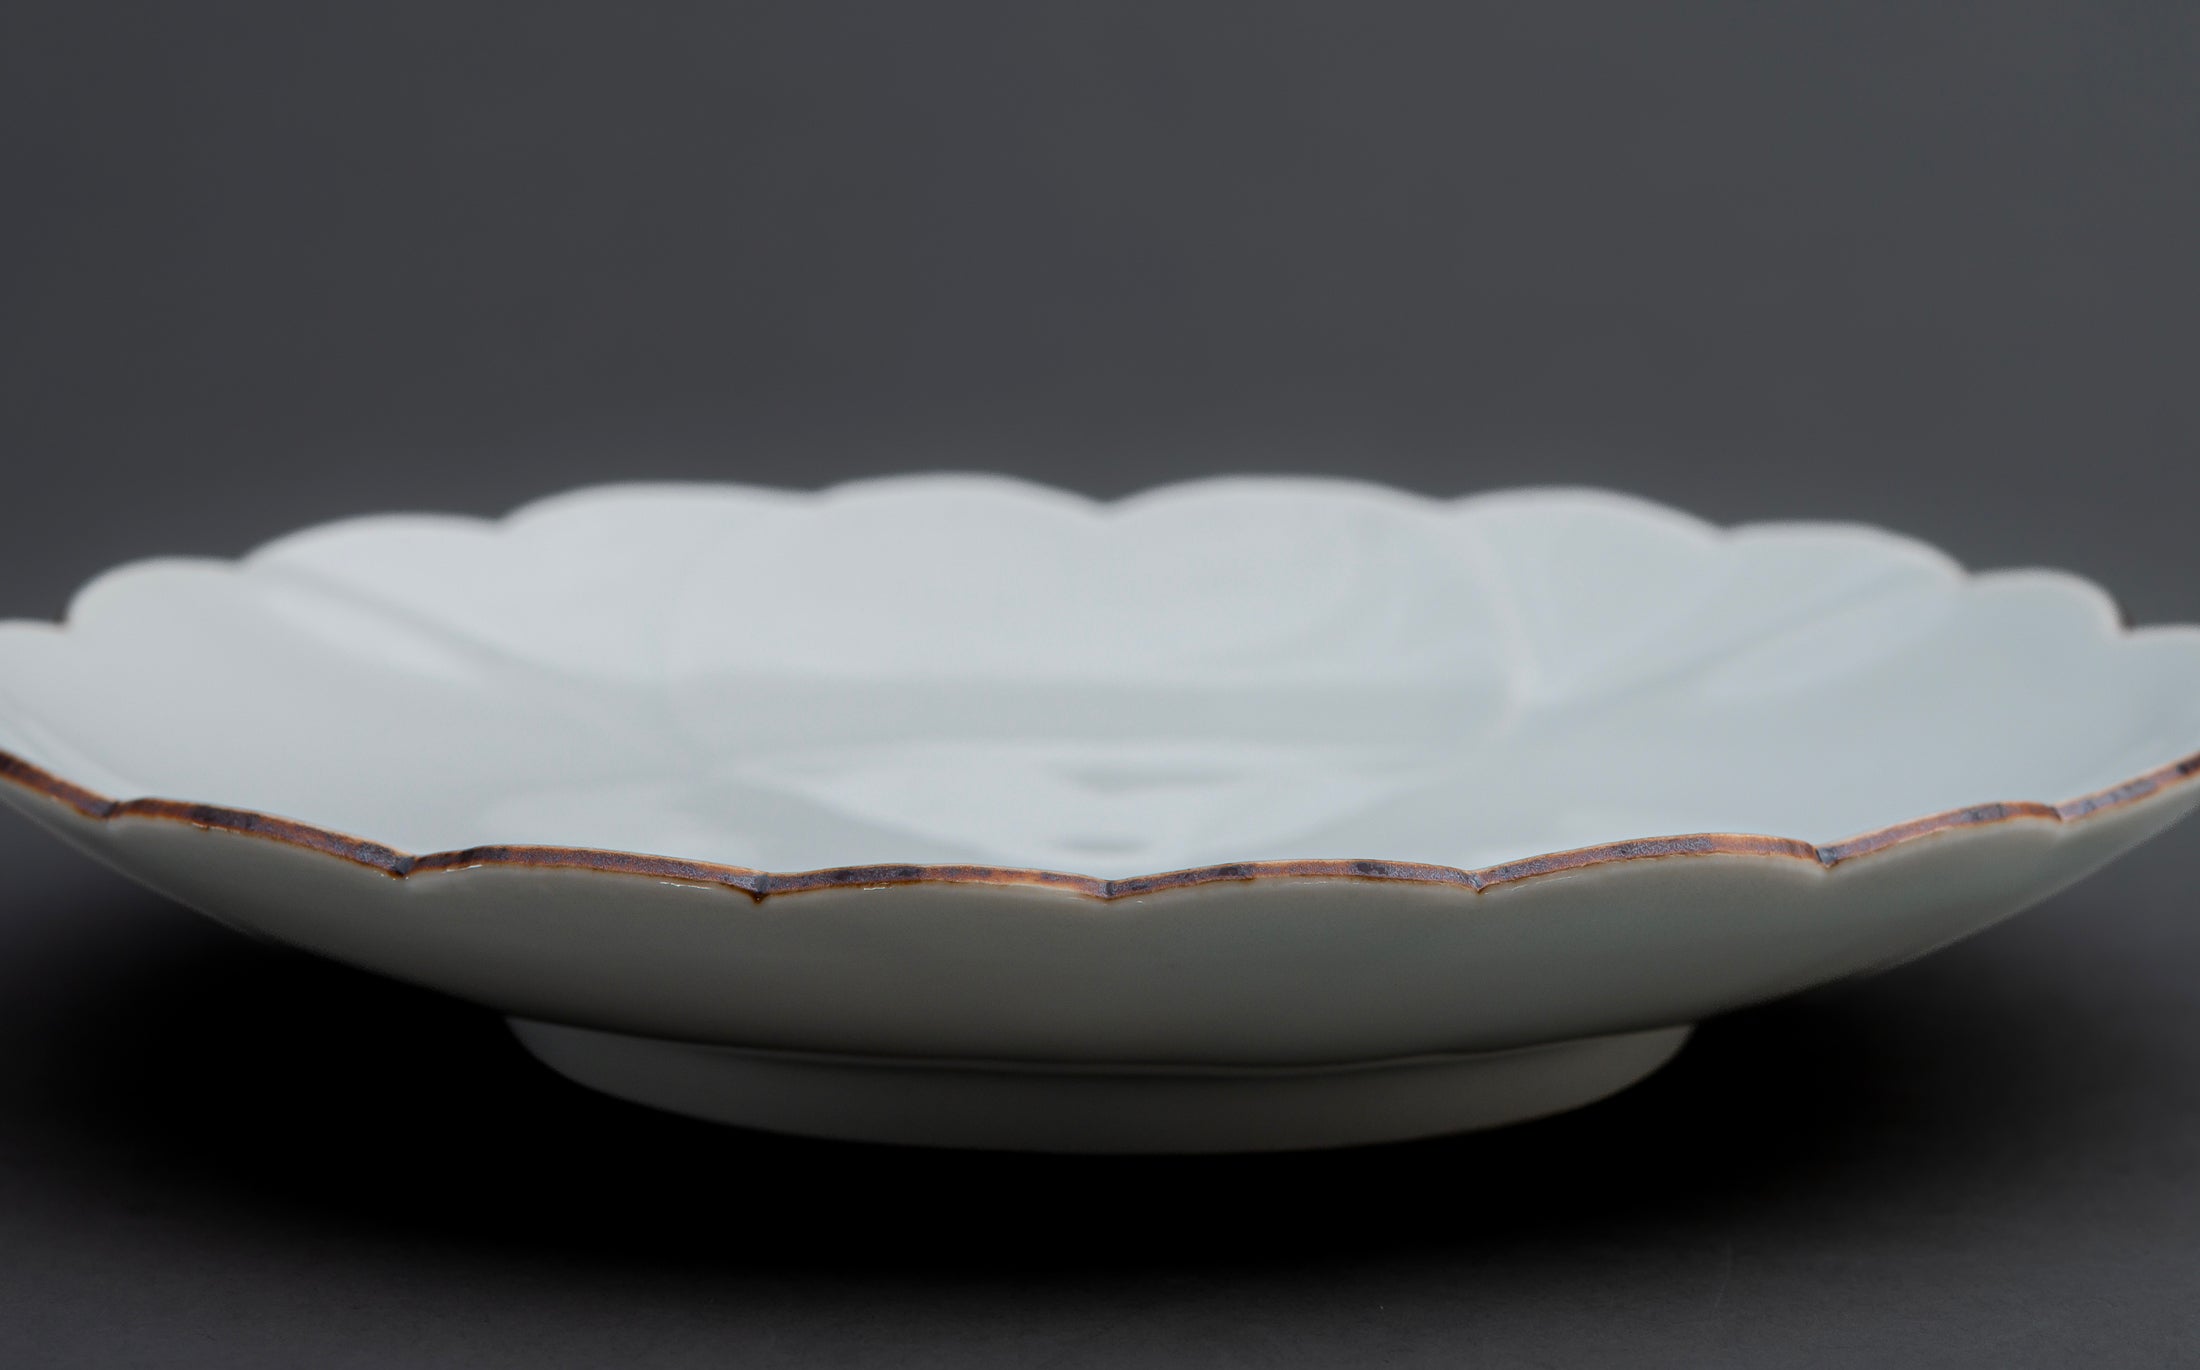 Katsutoshi Mizuno - Porcelain White - Plate 078